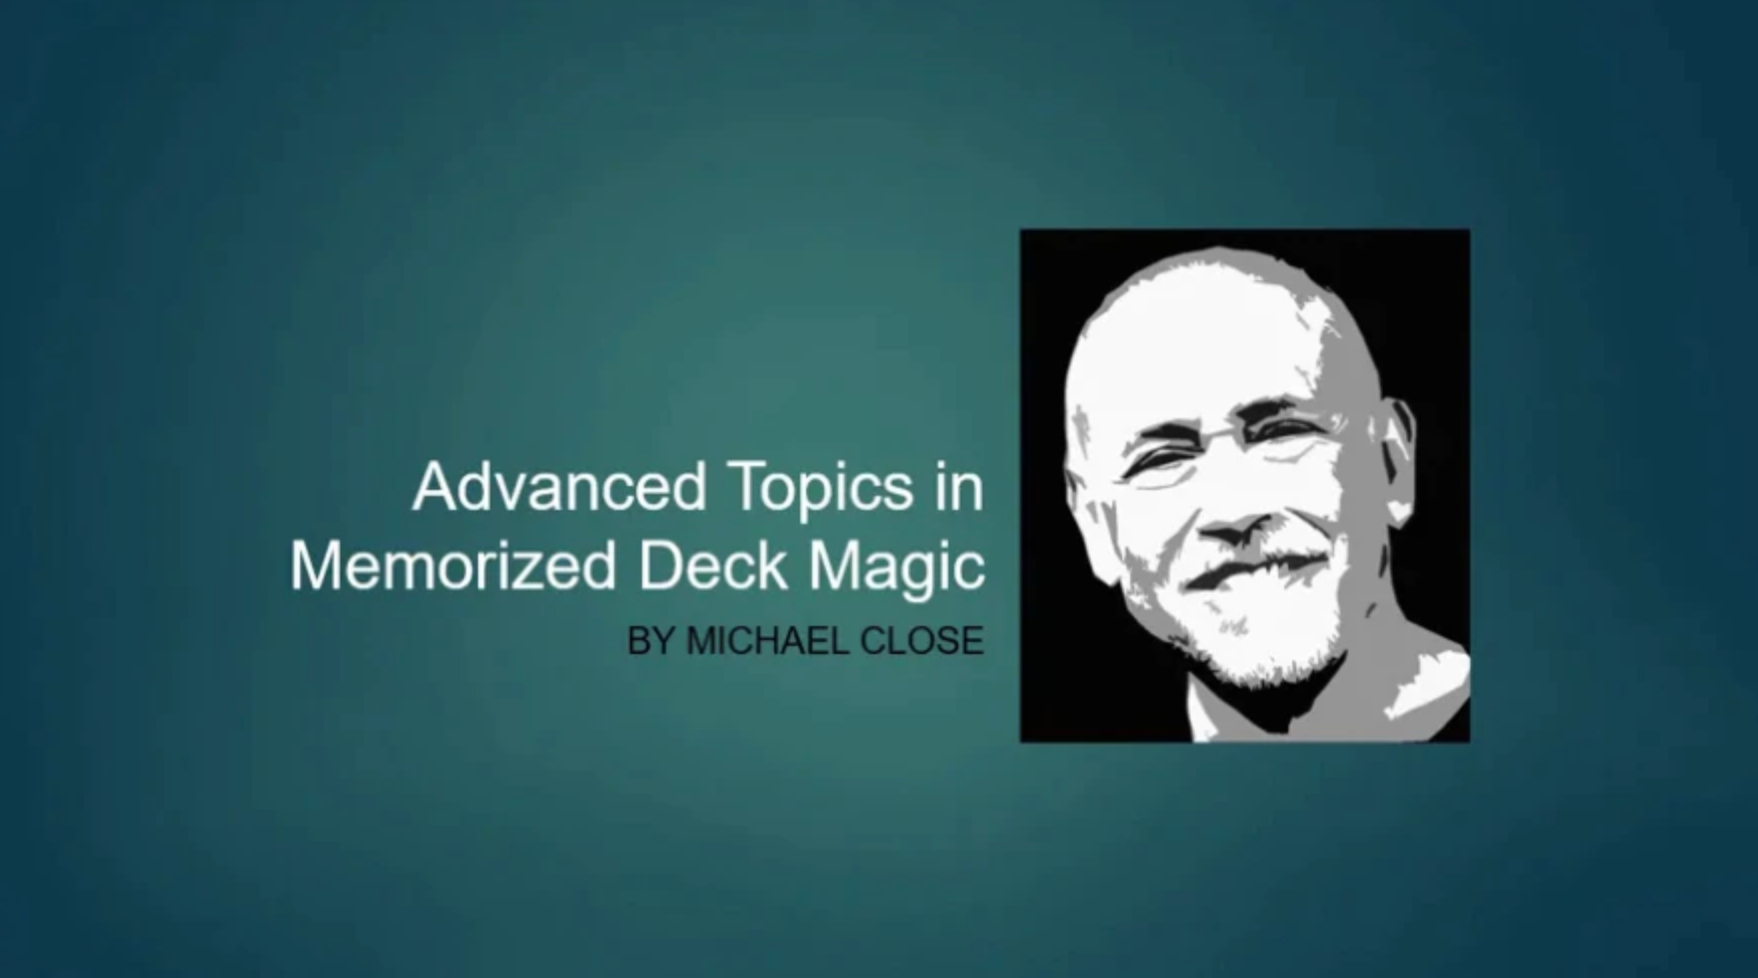 Advanced Topics on the Memorized Deck